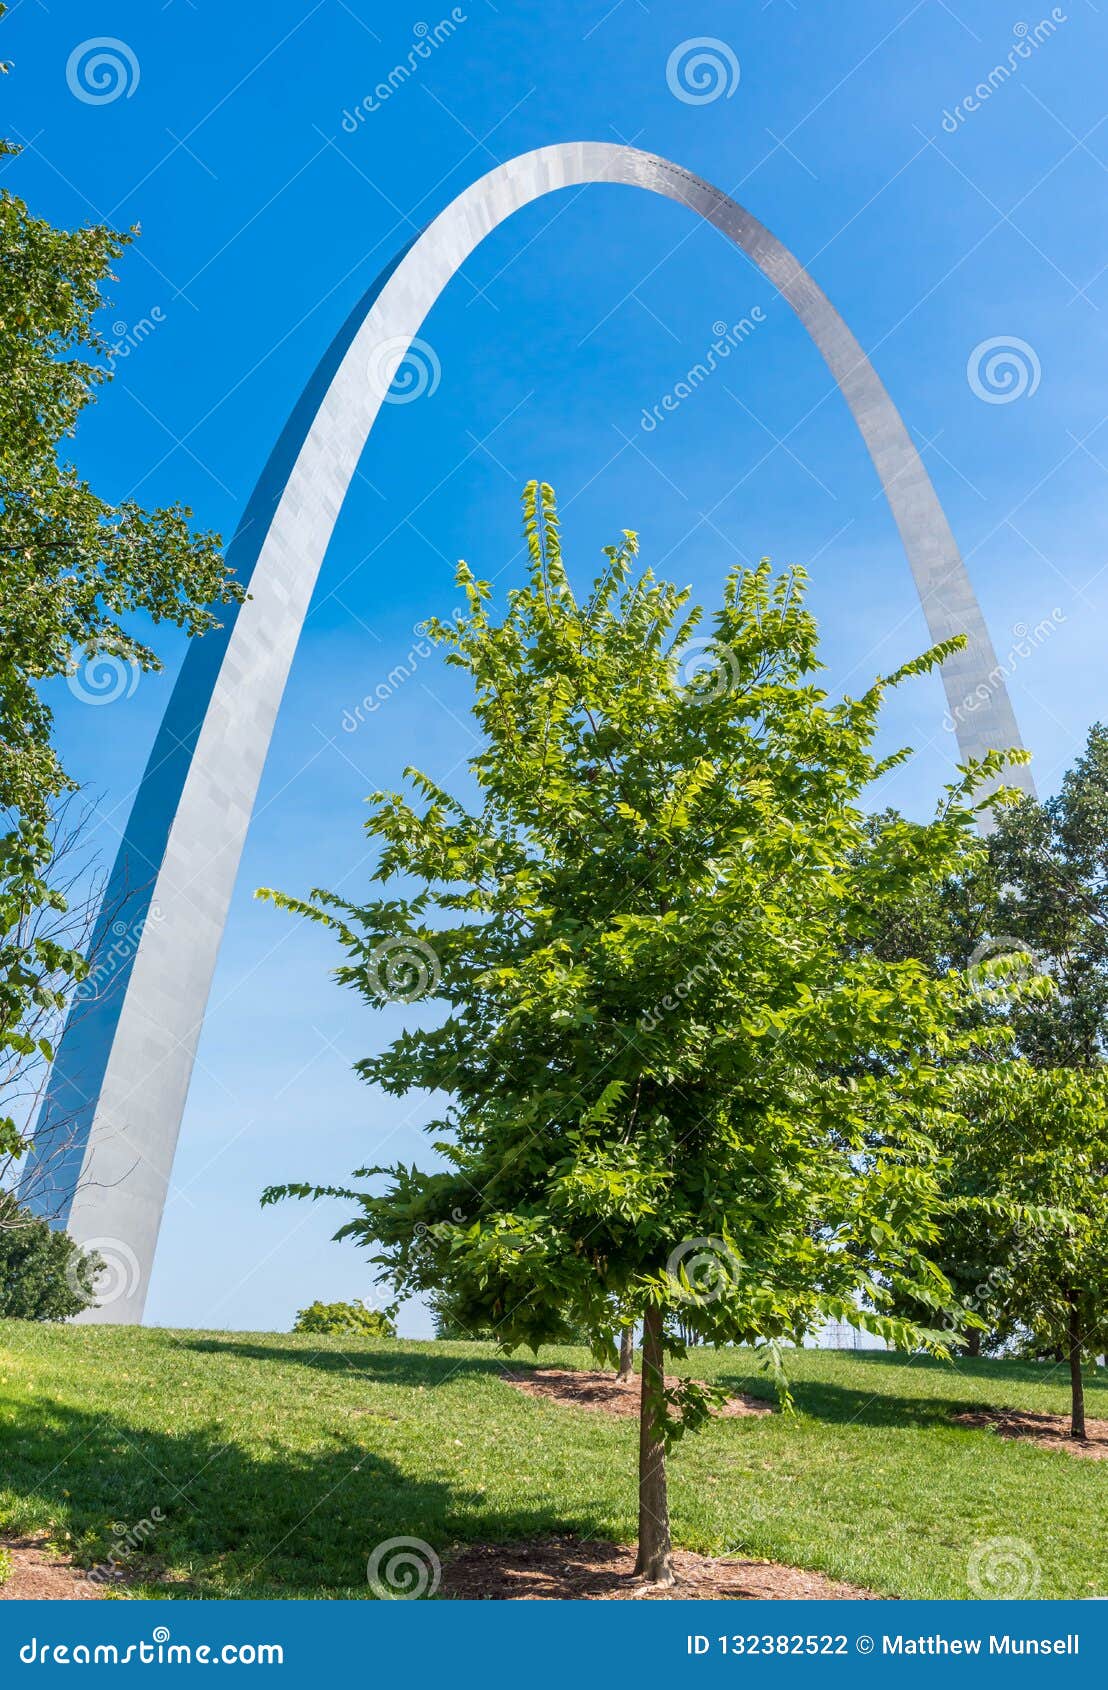 Gateway Arch Of St Louis, Mo Stock Photo - Image of dress, craftsmen: 132382522